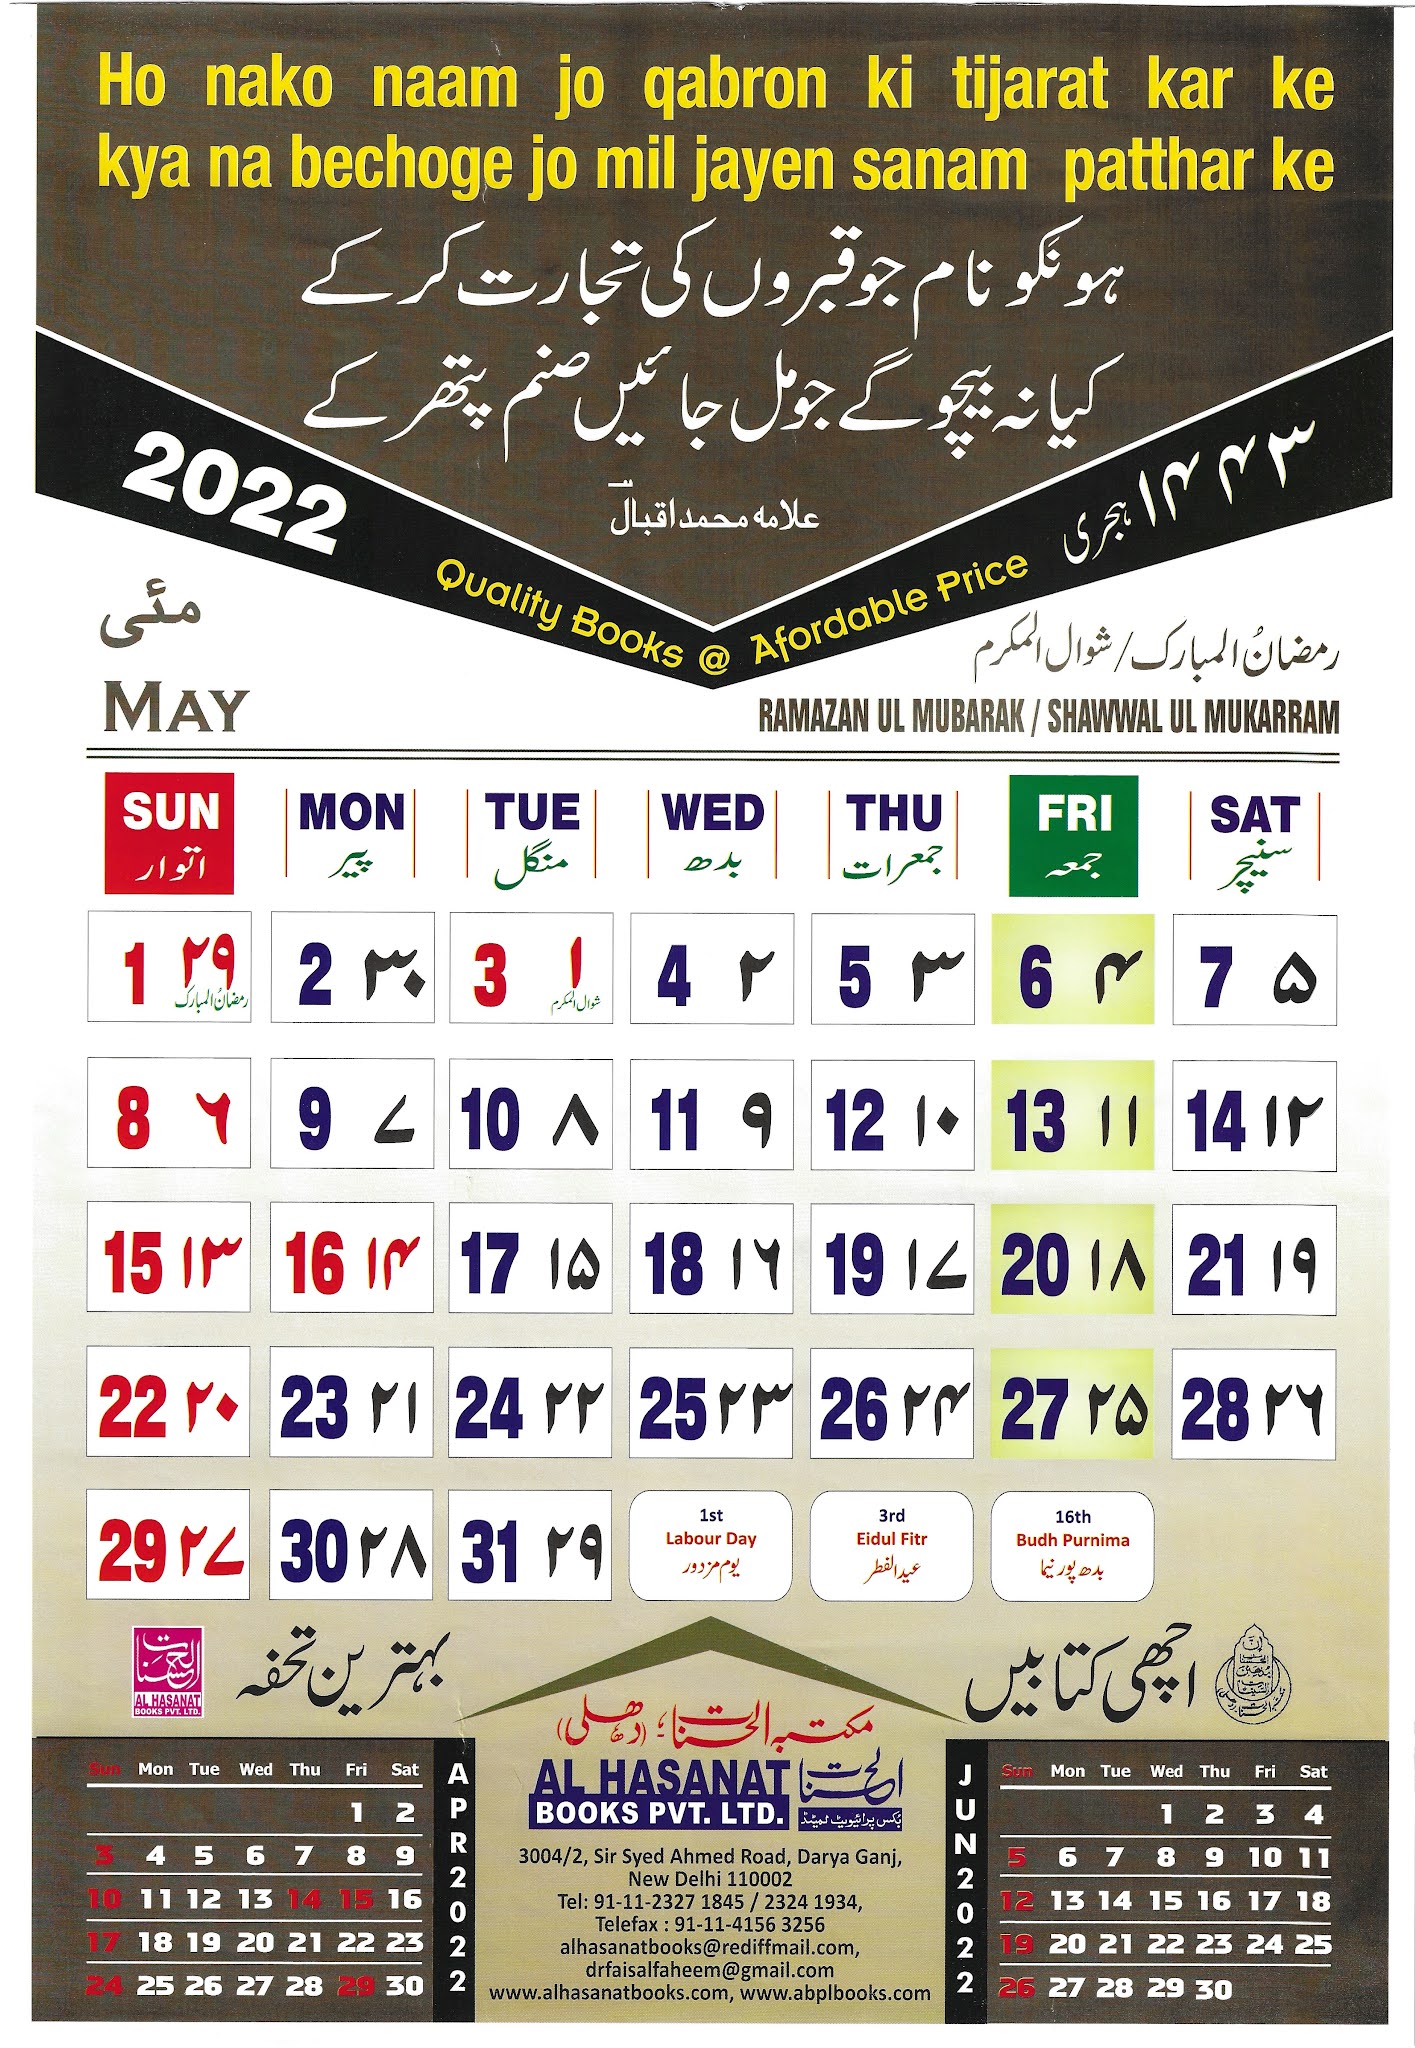 1 October 2022 Islamic Date